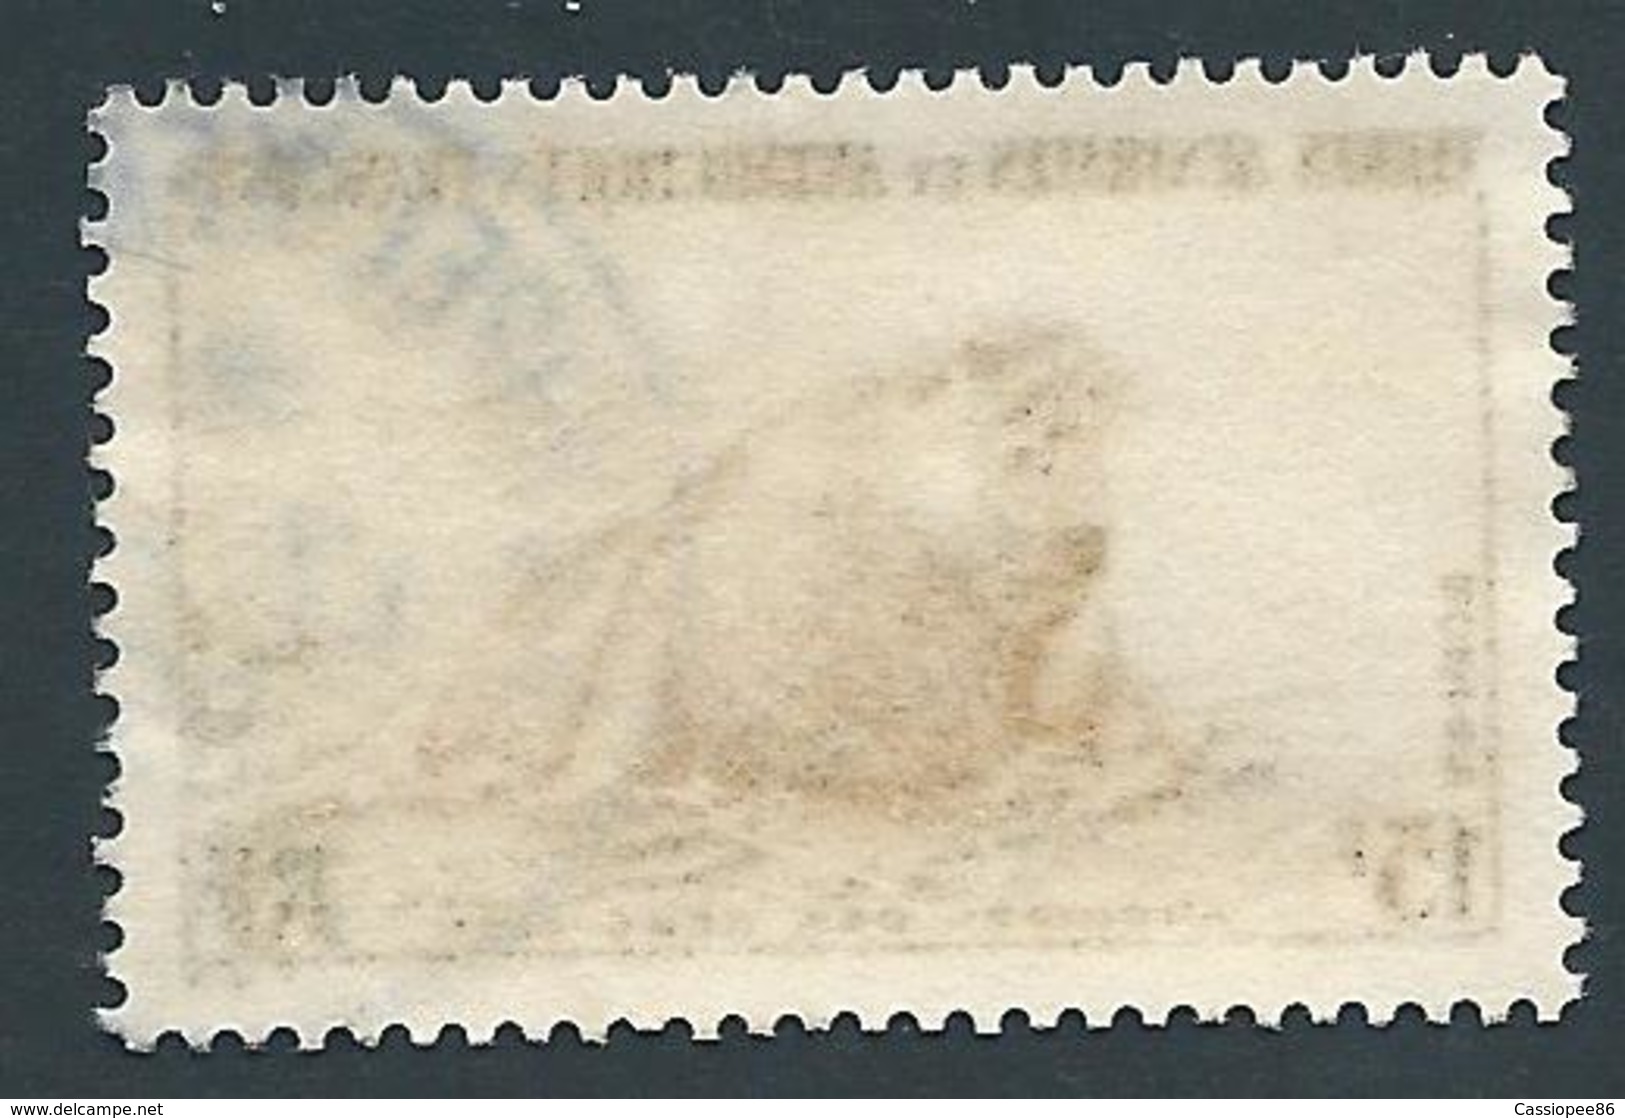 TAAF 1956 - YT N°7 - 15 F. - Faune - Eléphant De Mer (Kerguelen) - Oblitéré - TTB Etat - Used Stamps